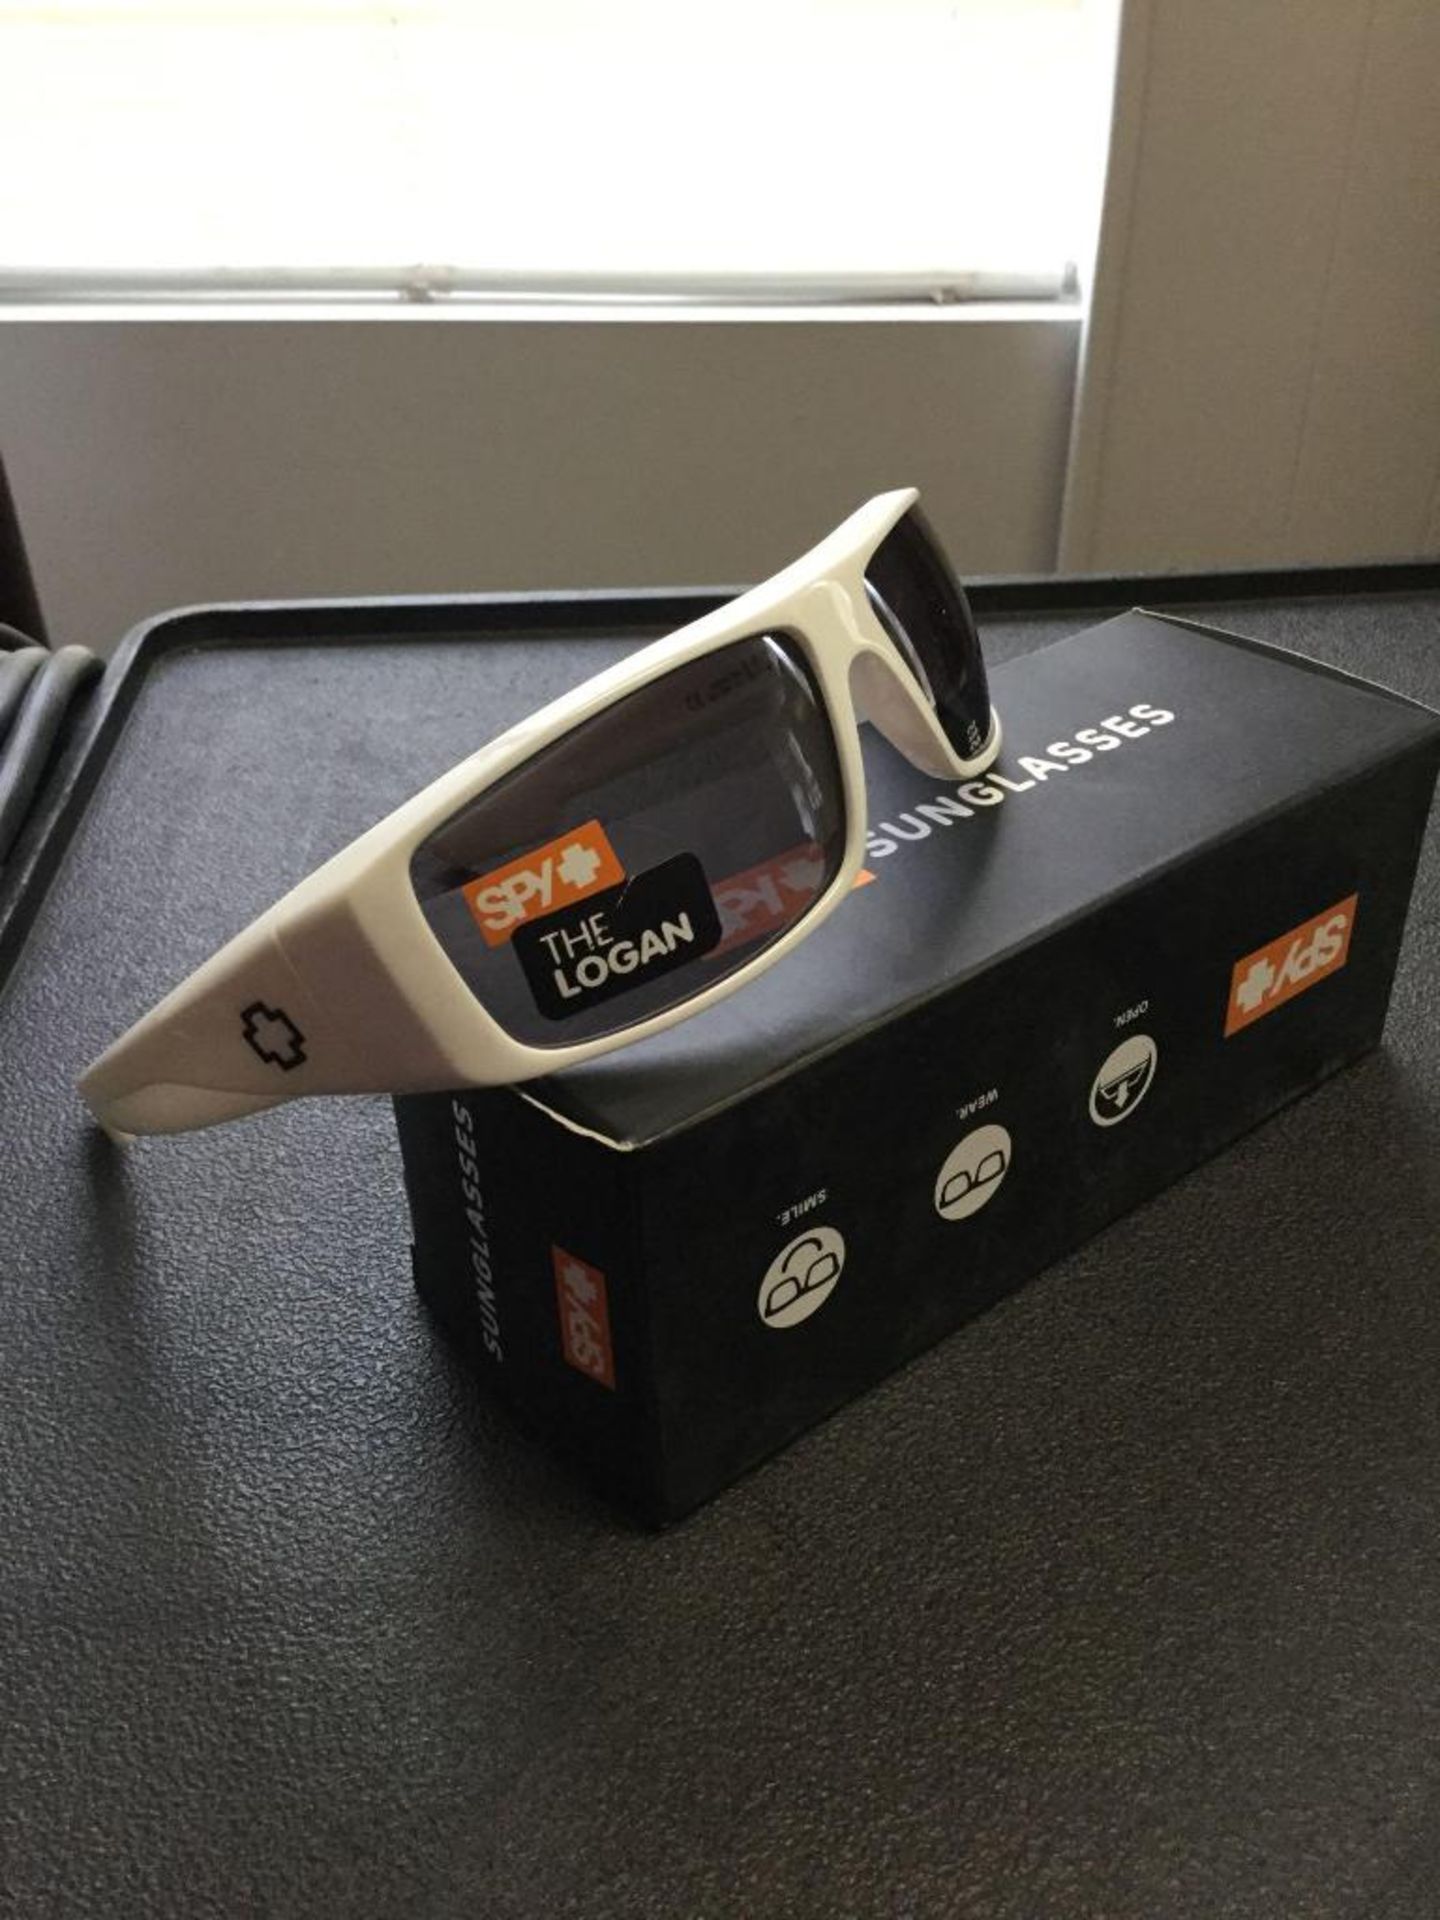 Spy Sunglasses - the Logan brand.